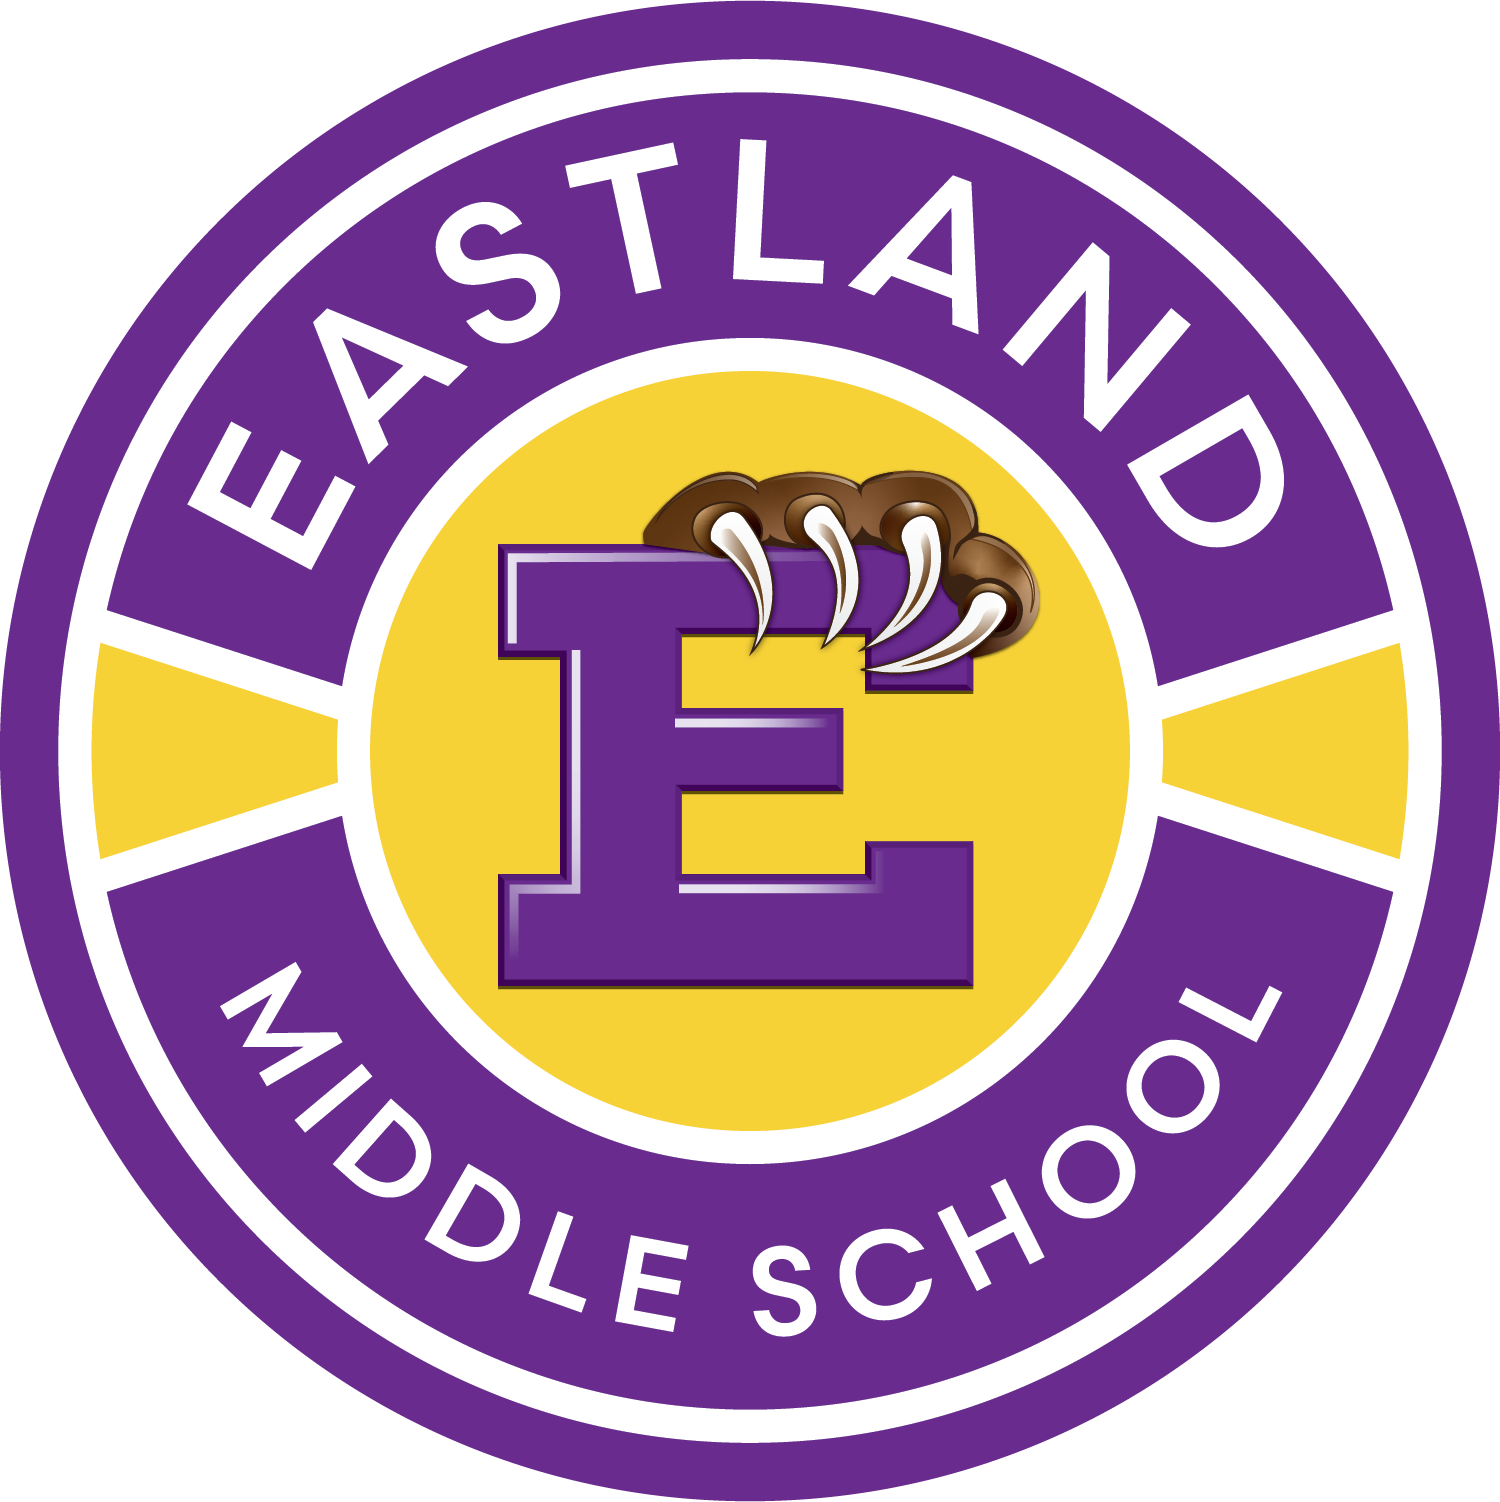 Eastland Middle School